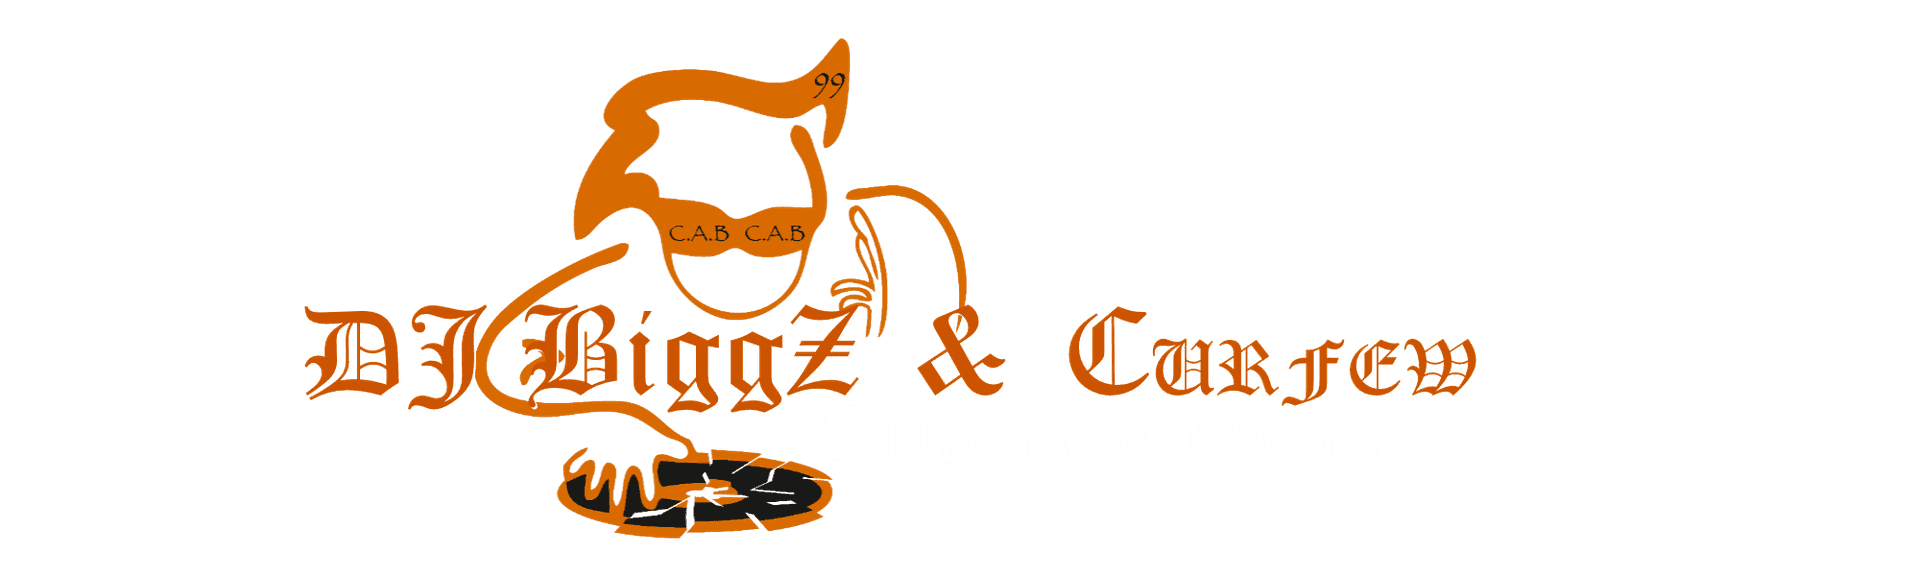 DJ BiggZ & Curfew Entertainment